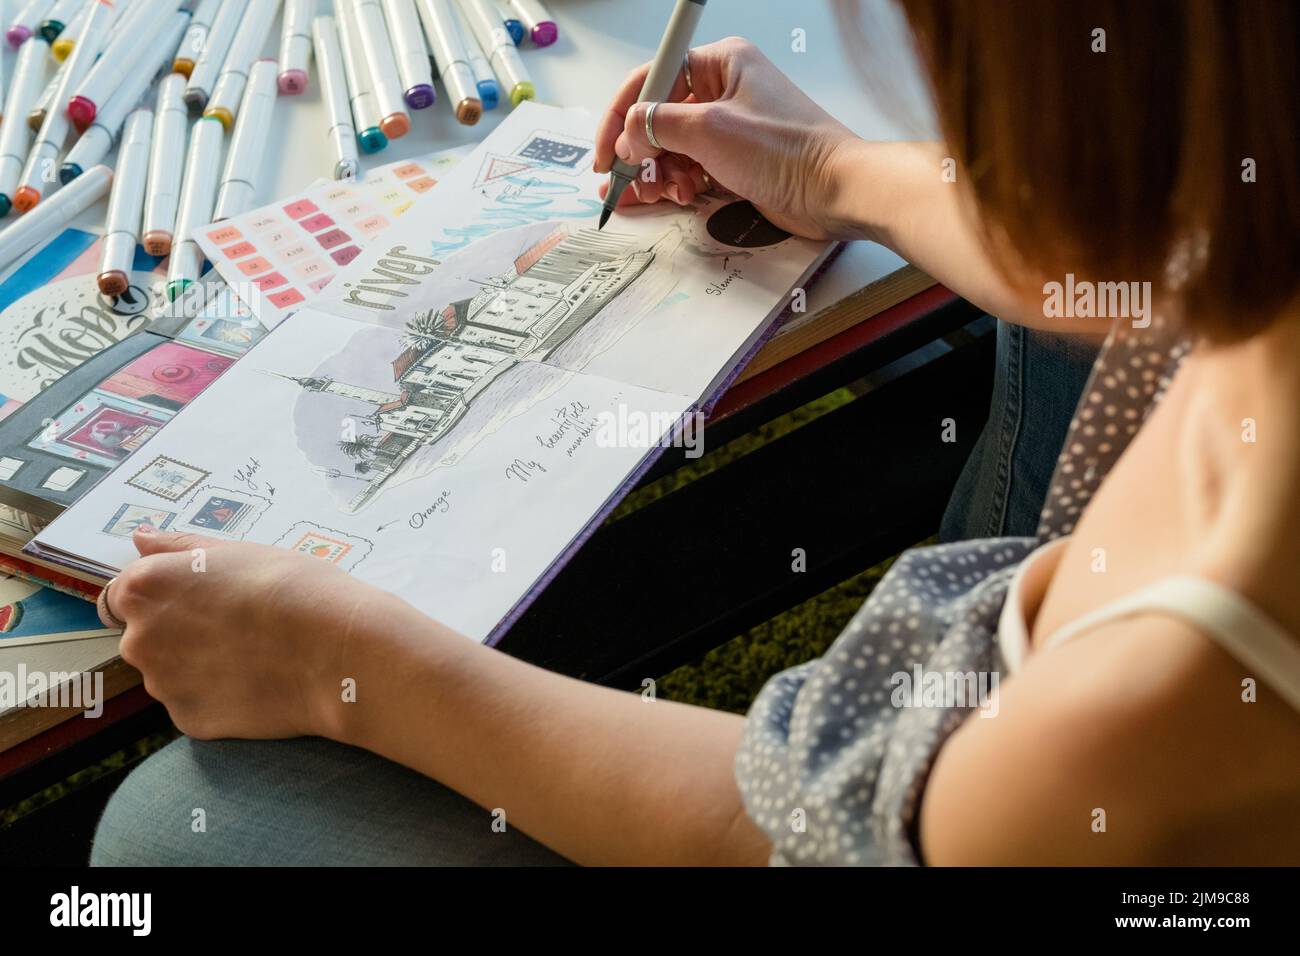 artist sketching workplace inspiration woman draw Stock Photo